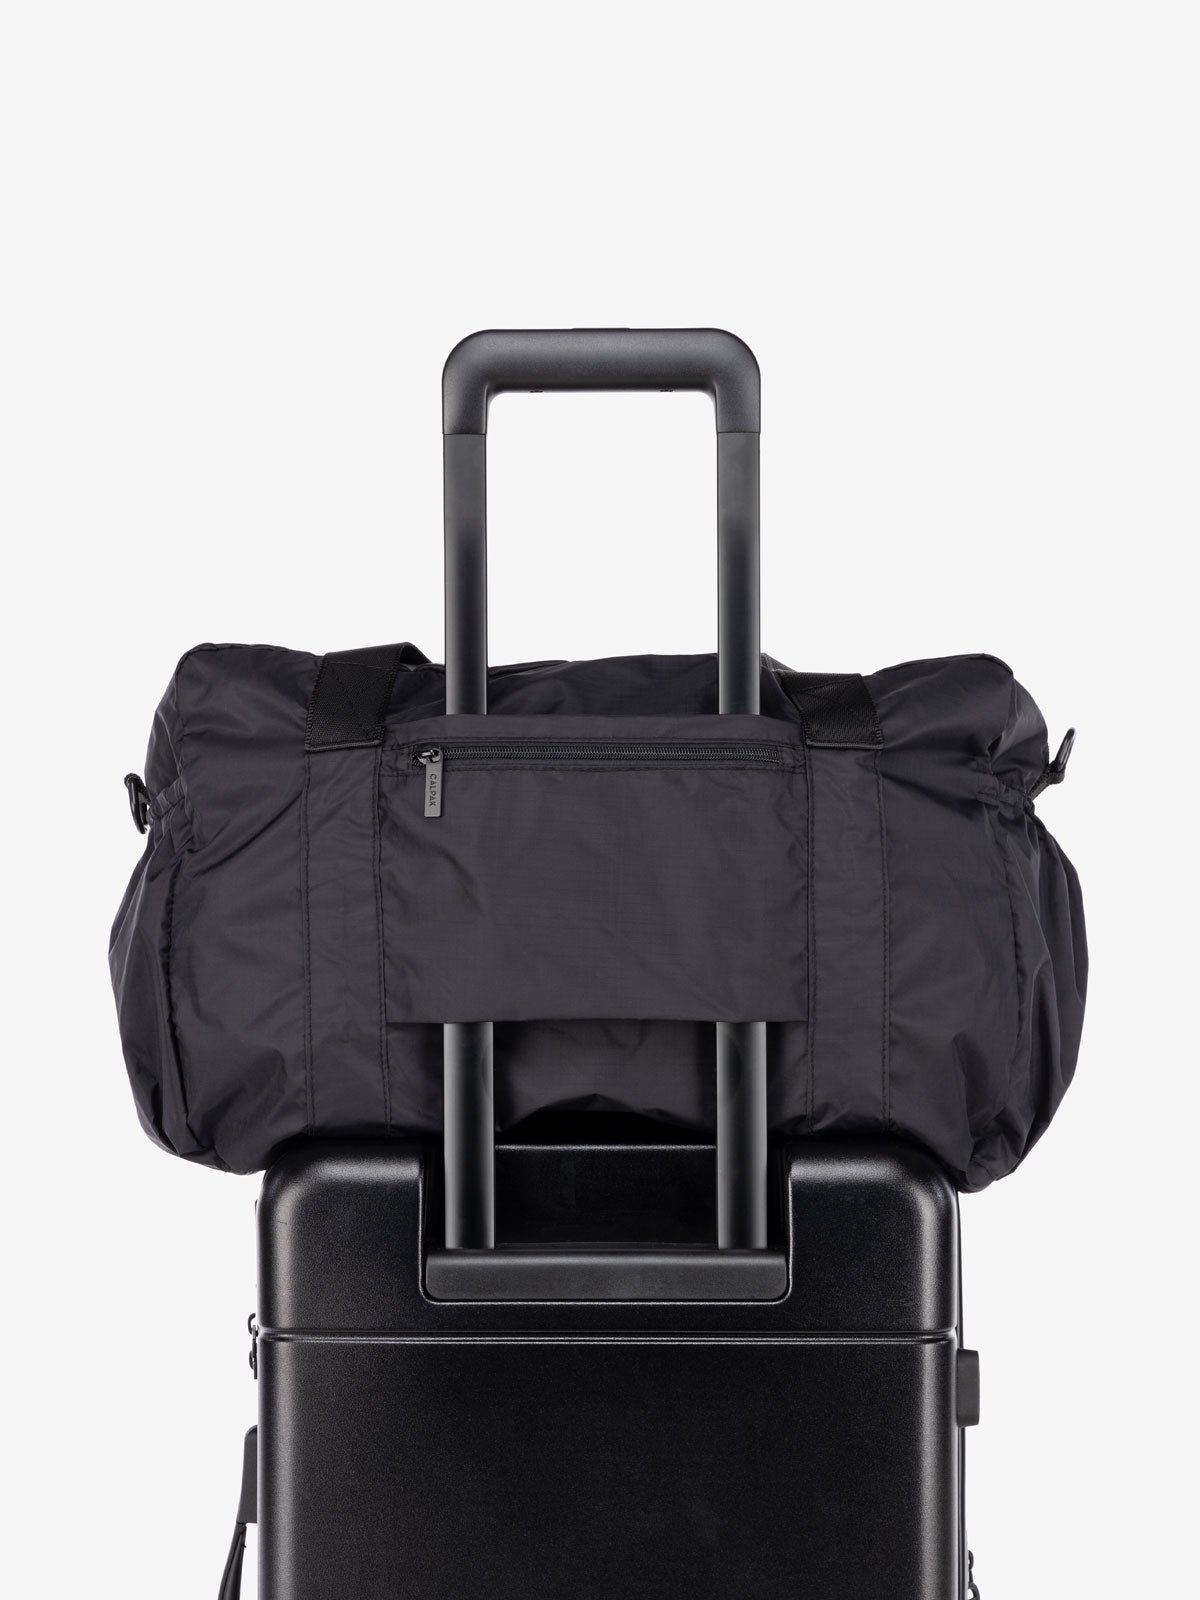 CALPAK black nylon duffle bag with pockets for travel